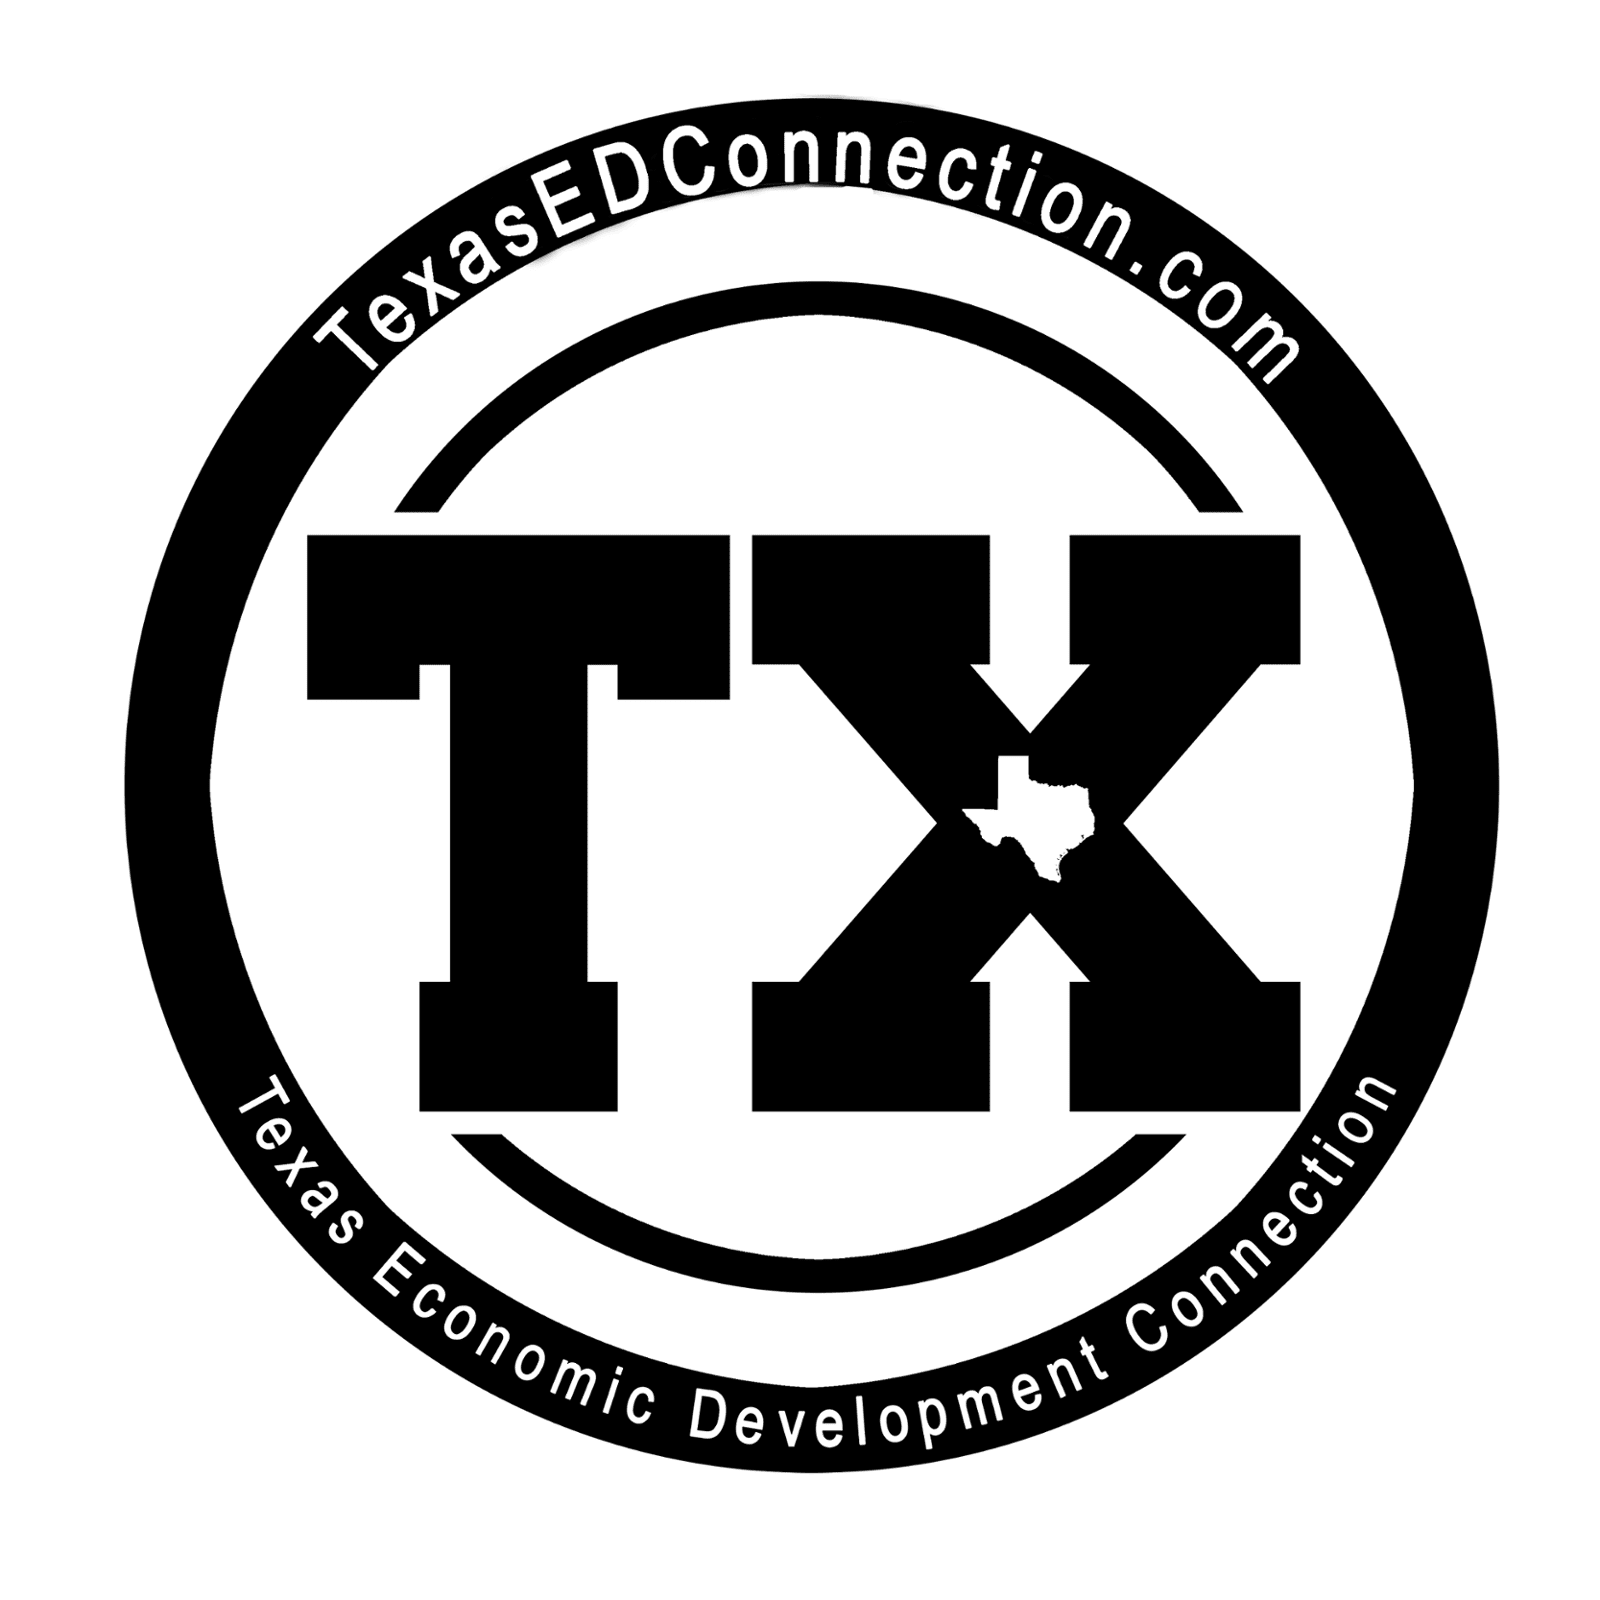 Texas Economic Development Connection